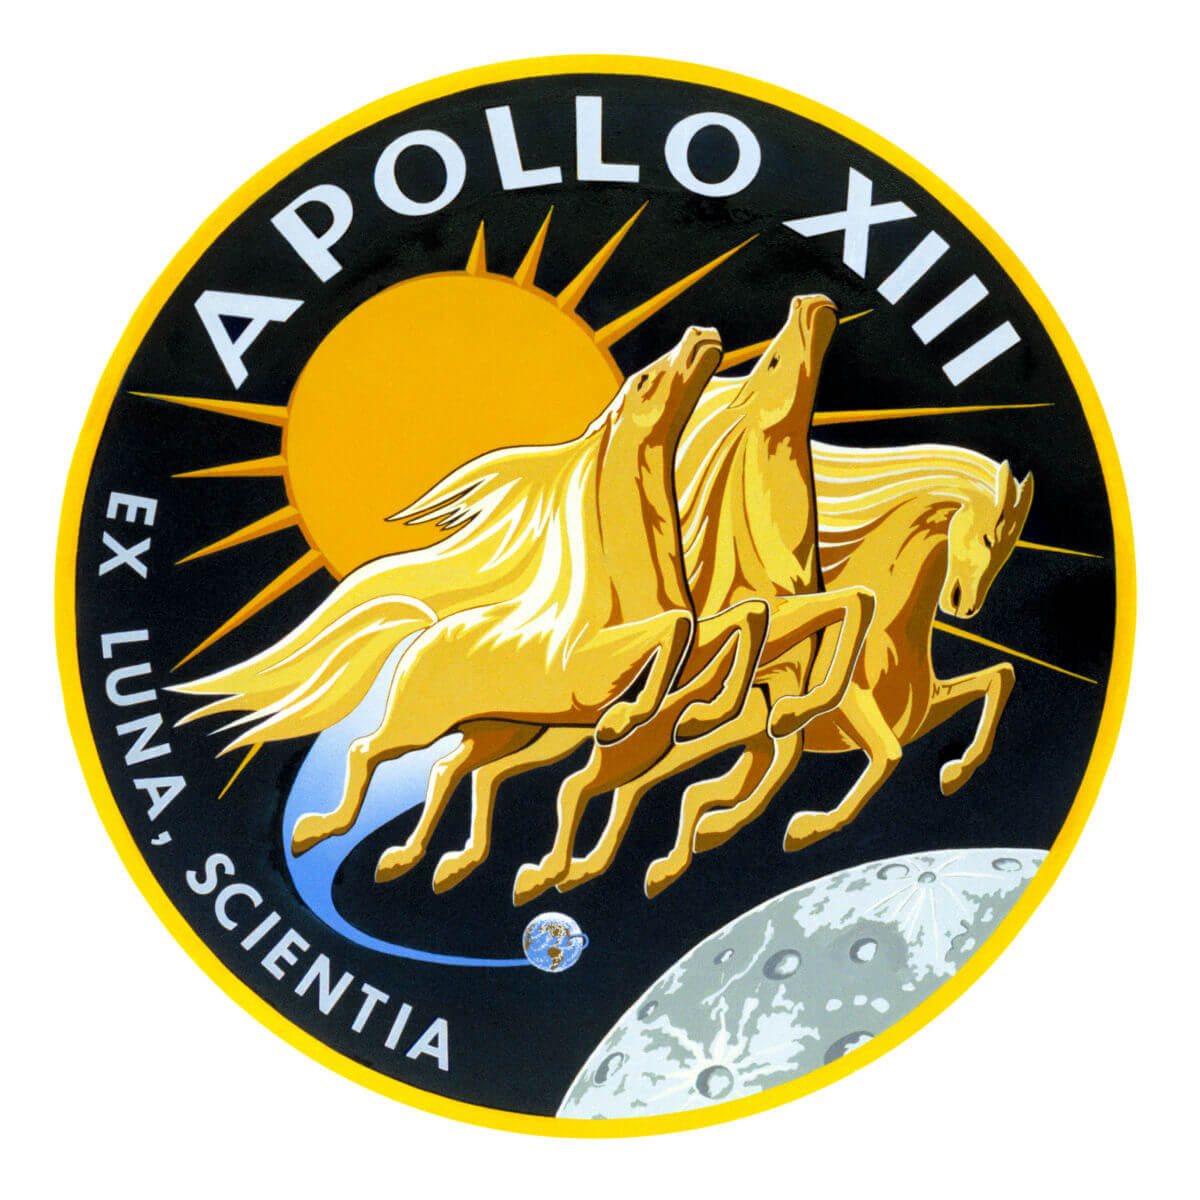 The Apollo 13 mission badge featuring Roman numerals